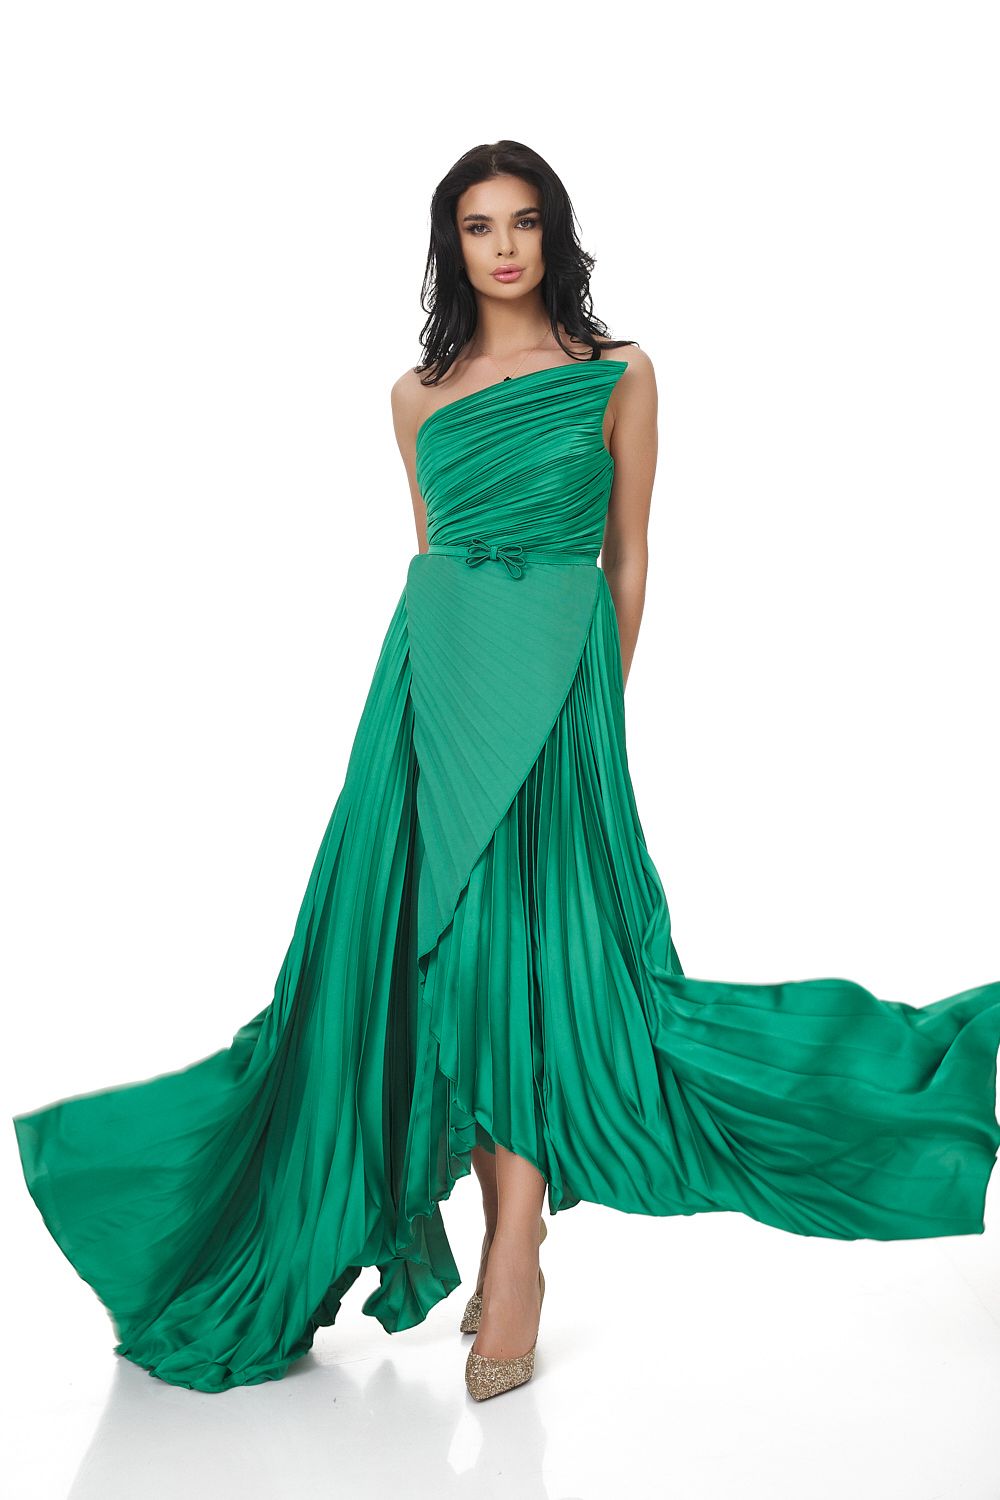 Miek Bogas hosszú zöld női ruha